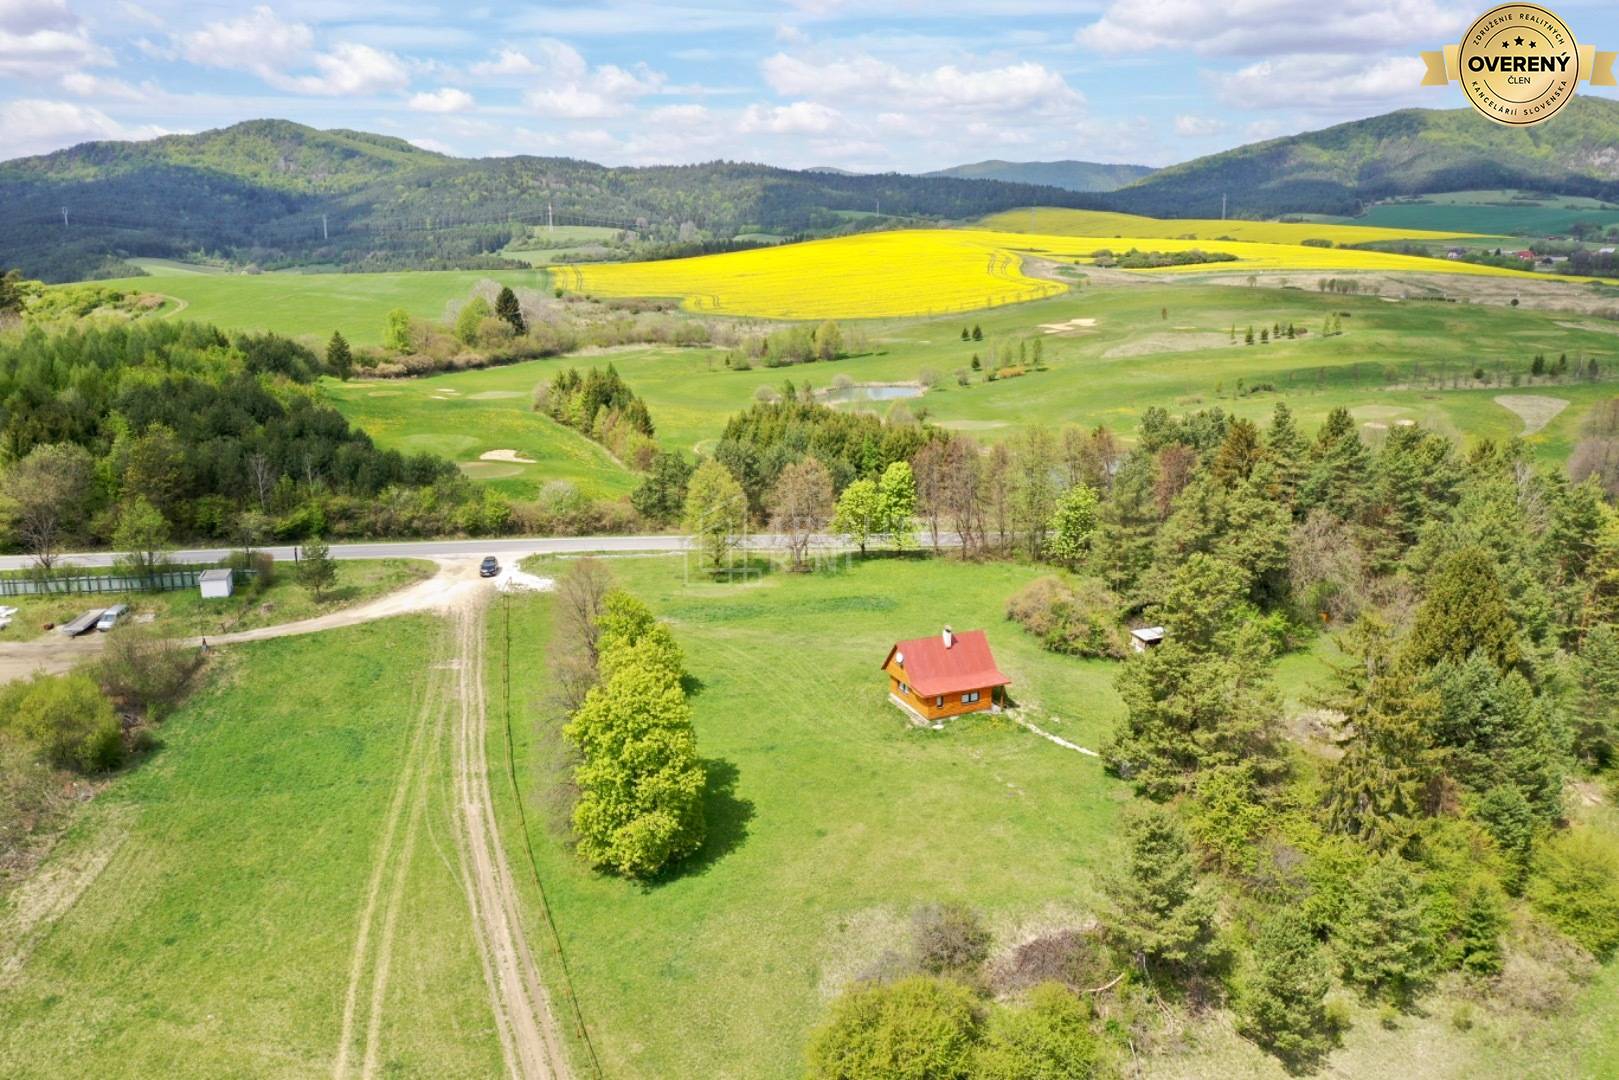 Land plots - commercial, Sale, Žilina, Slovakia